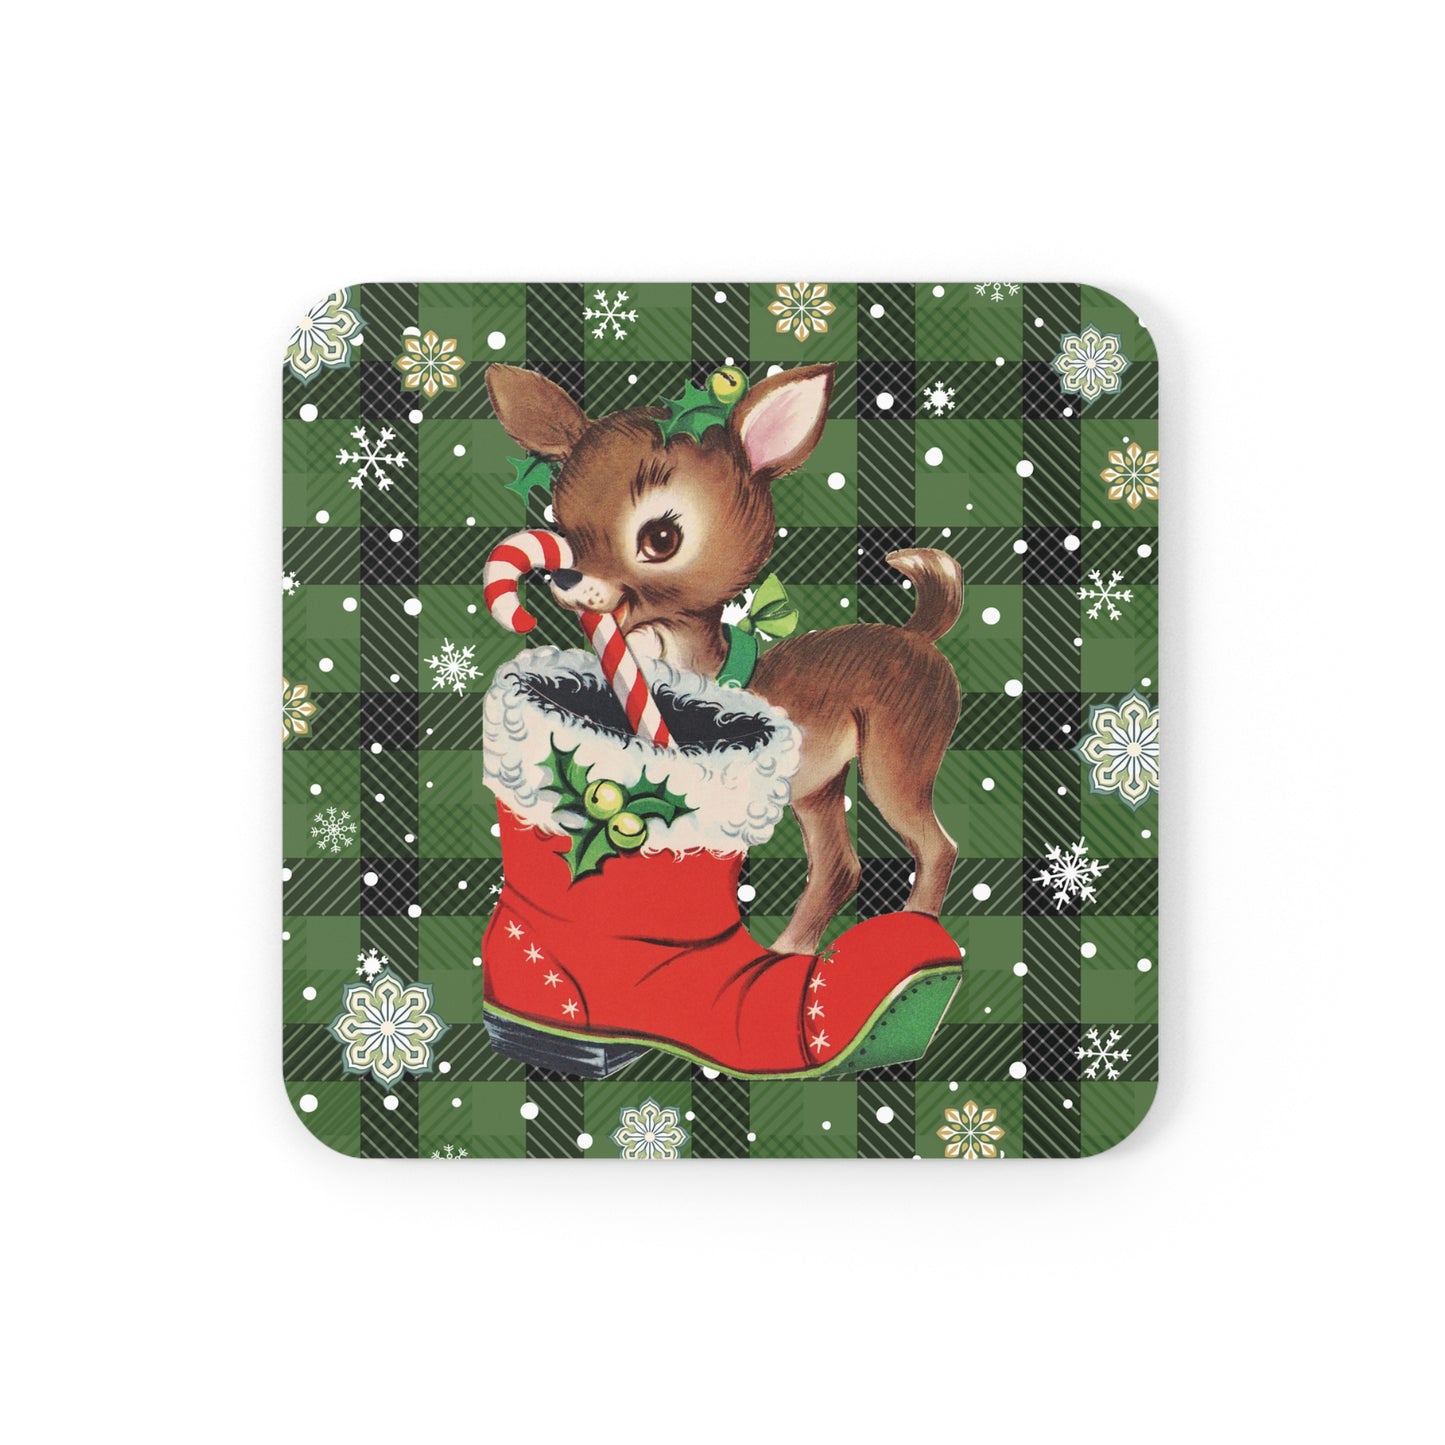 Retro 50s Christmas Vintage Reindeer MCM Green Coaster Set